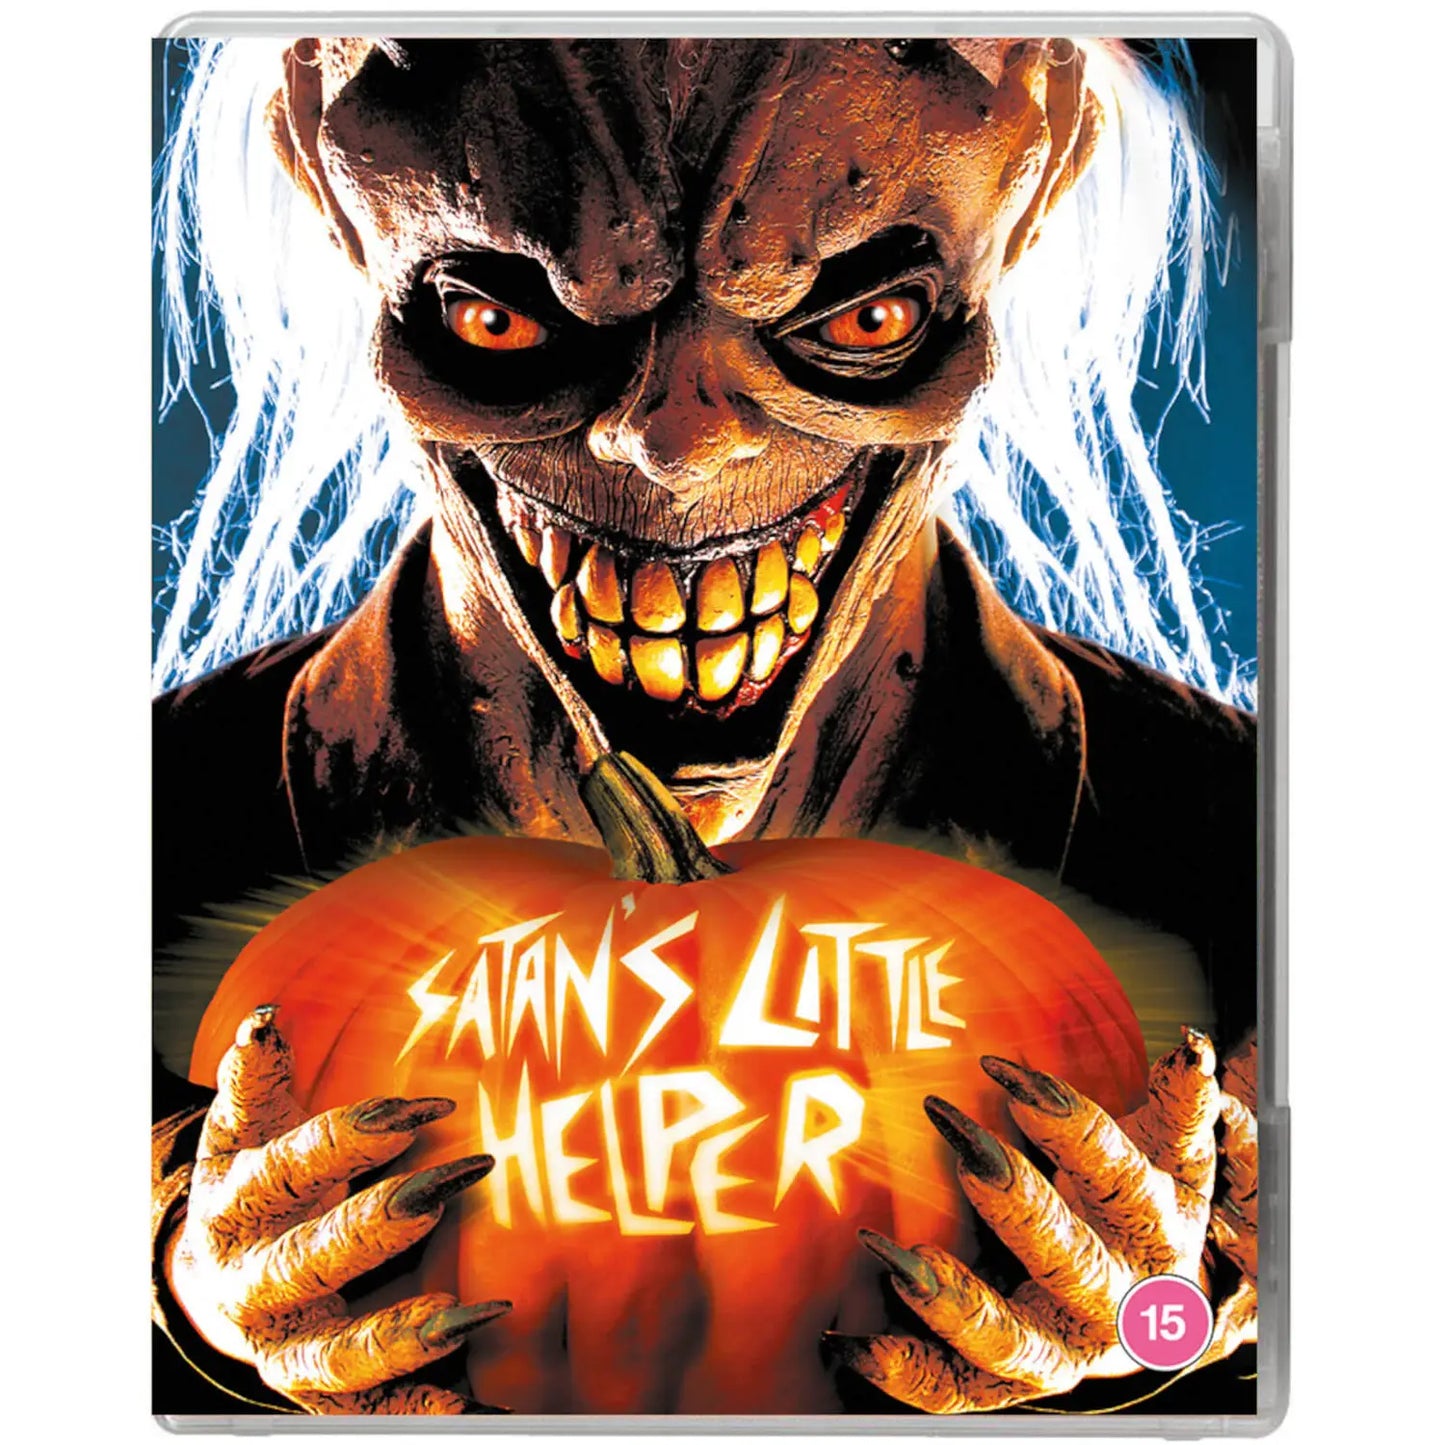 Satan's Little Helper Blu-ray with Slipcase (Treasured Films/Region B)